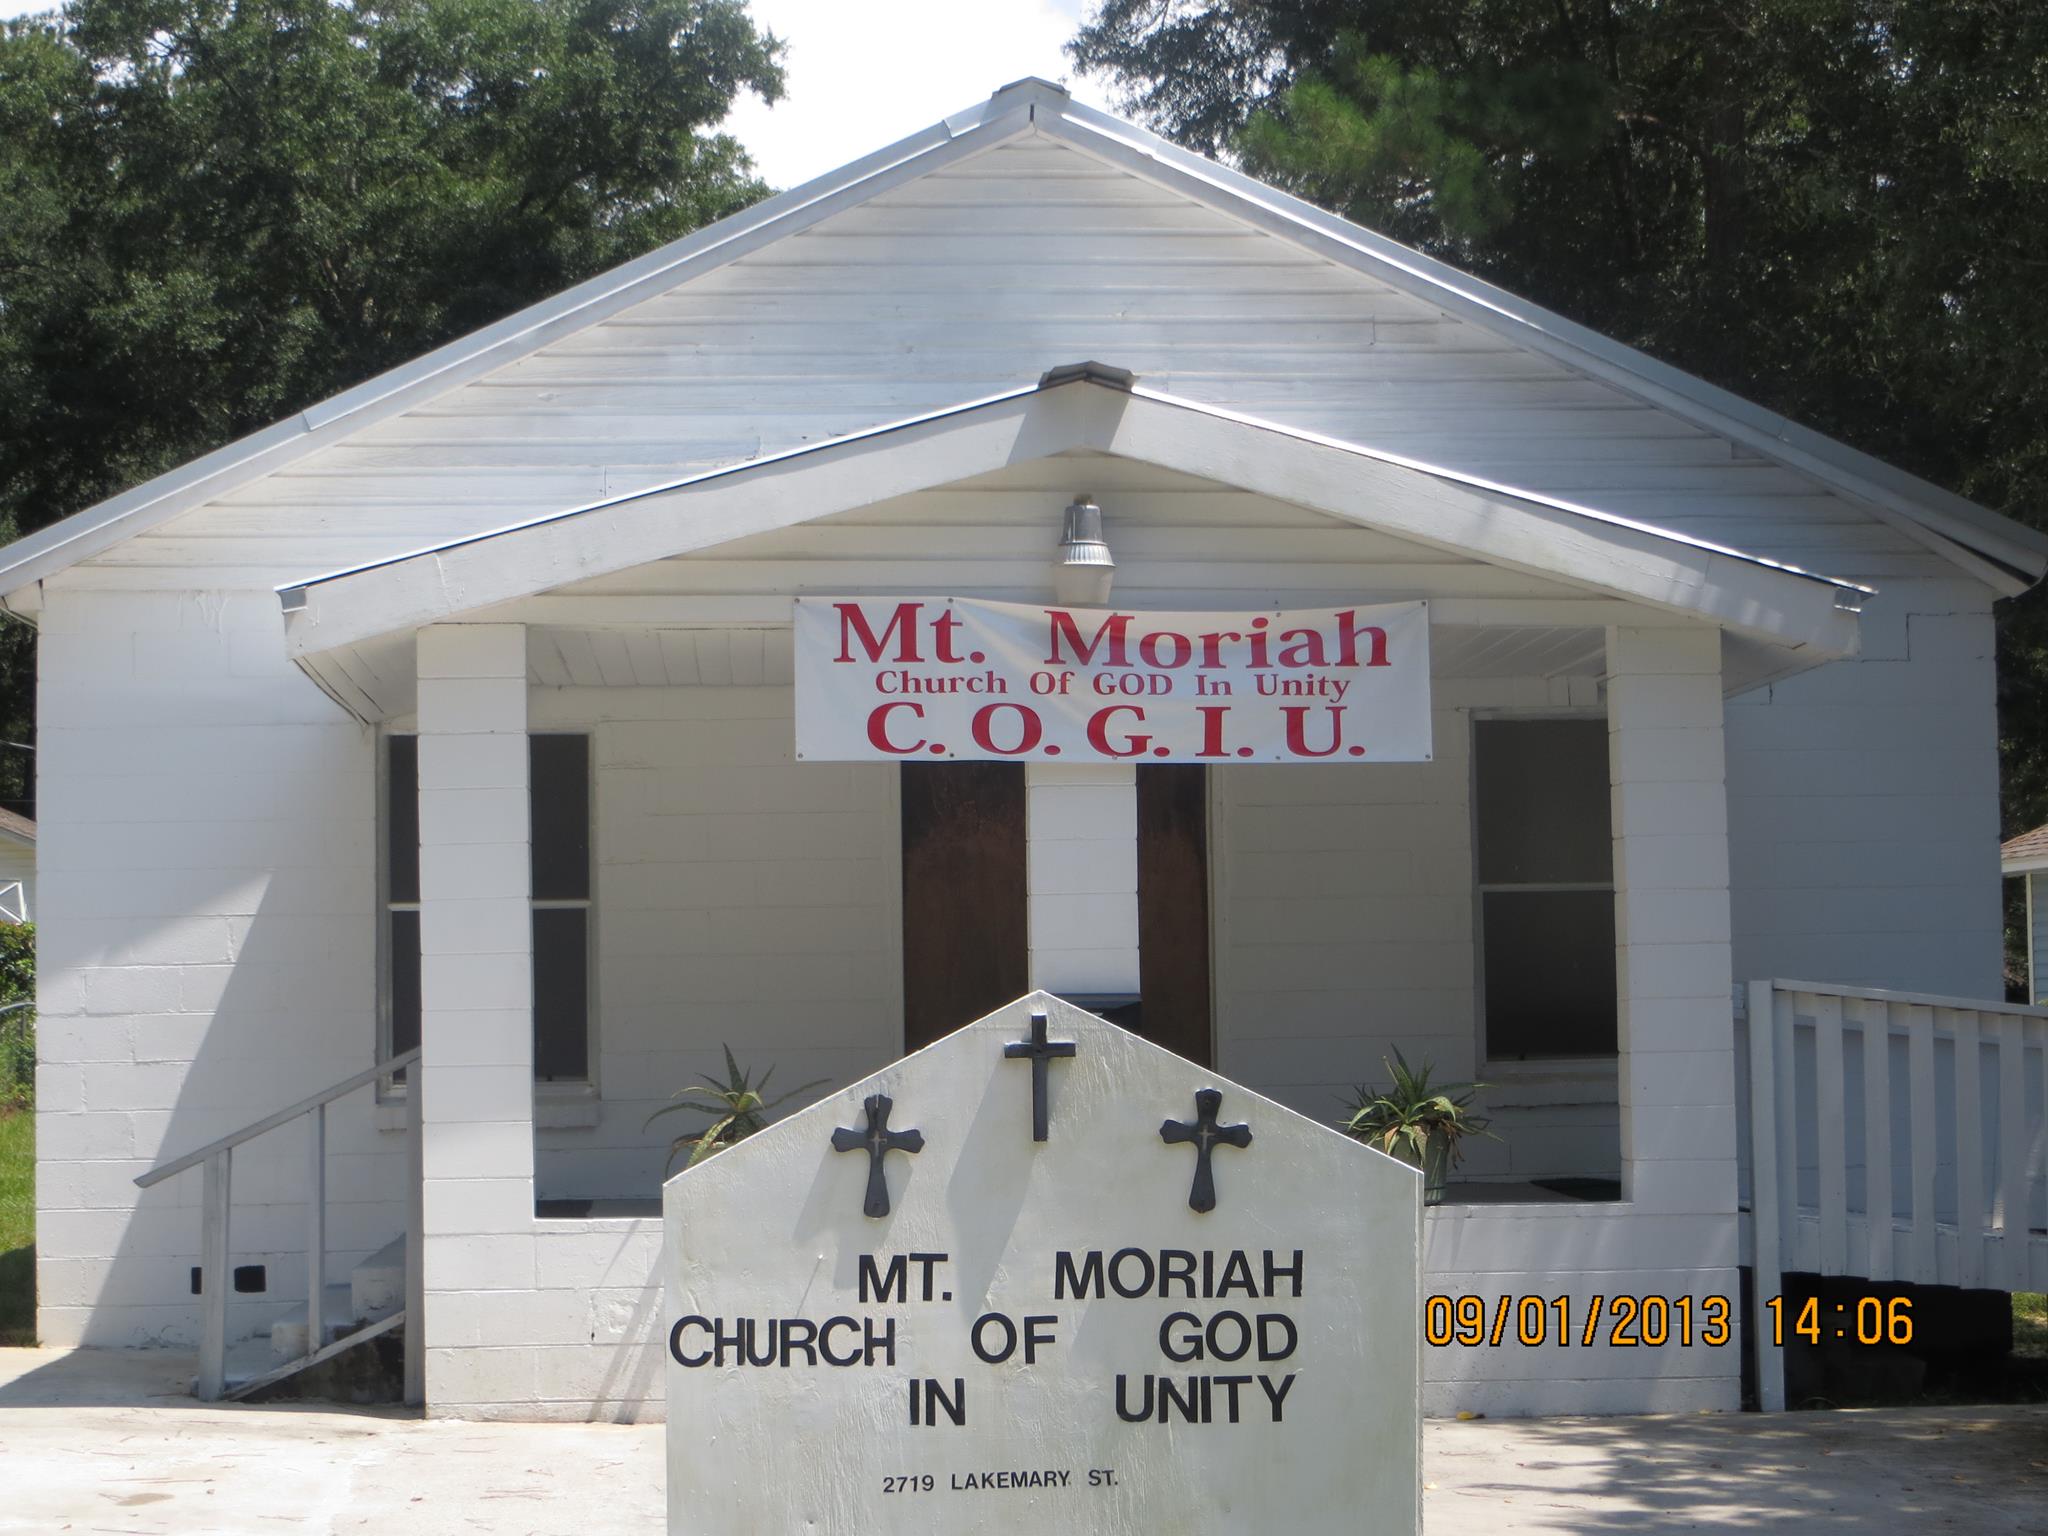 Mt. Moriah Church of God